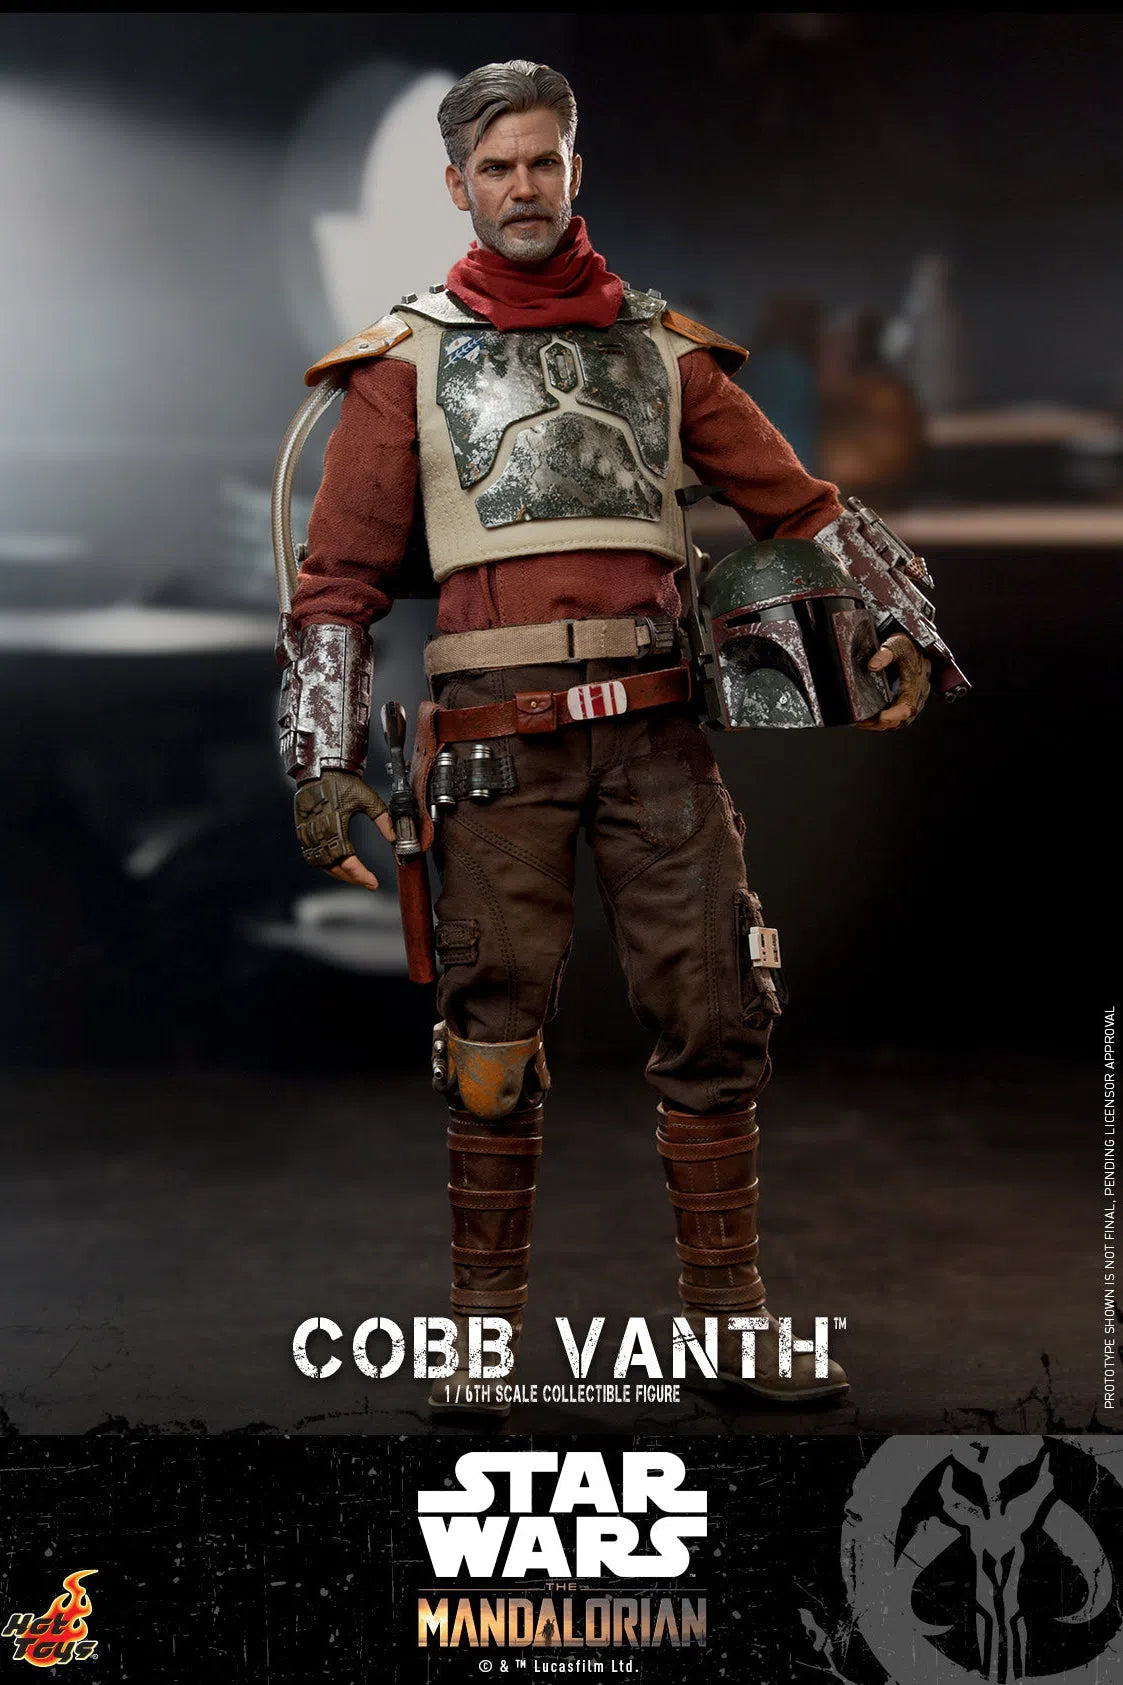 Cobb Vanth: Star Wars: The Mandalorian